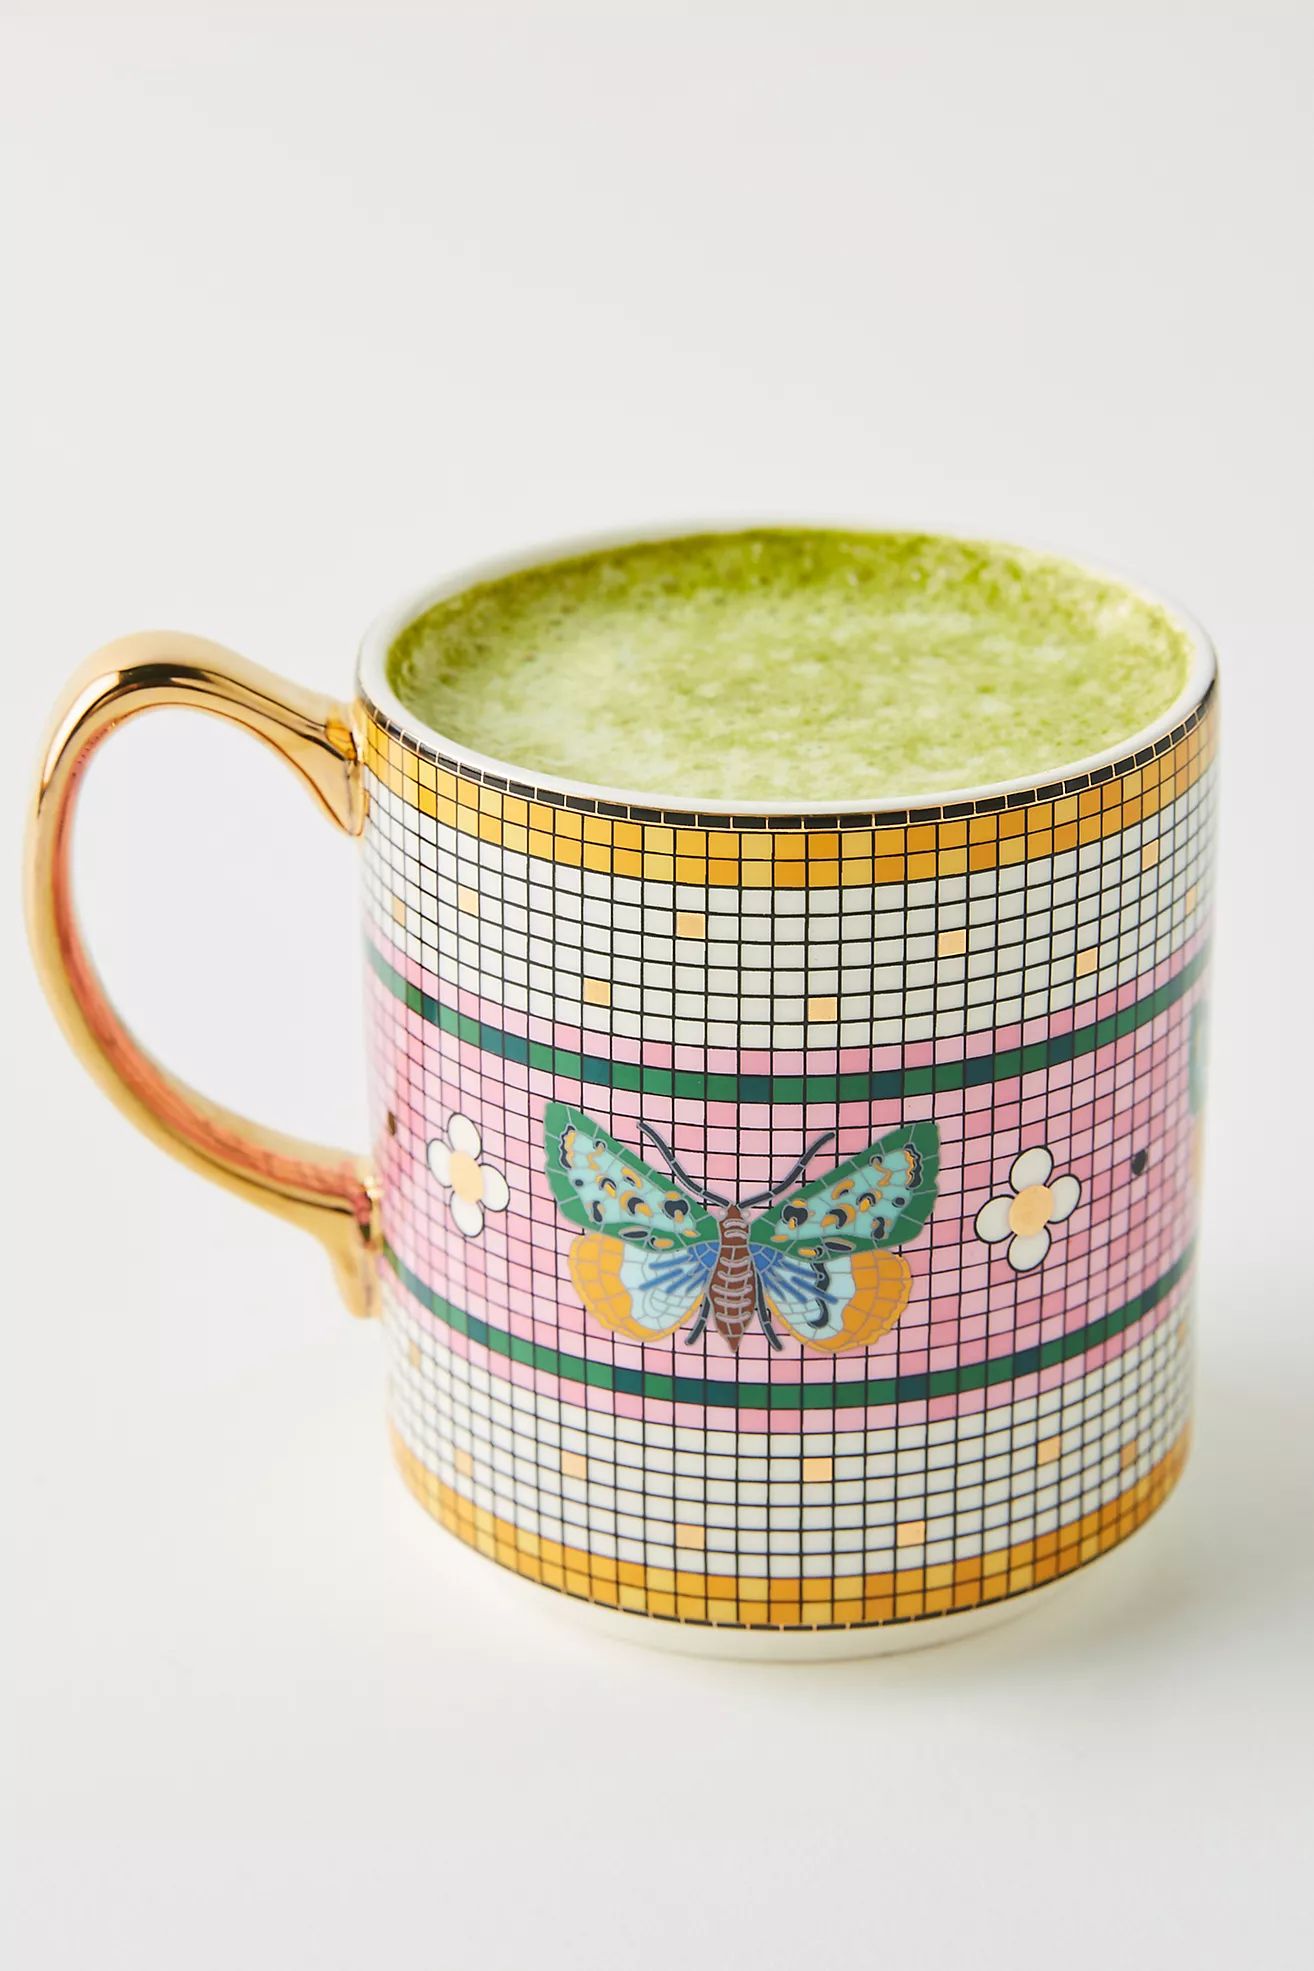 Bistro Garden Tile Mug, Anthropologie Mug, Anthropologie Summer Mug, Anthropologie Spring Home,  | Anthropologie (US)